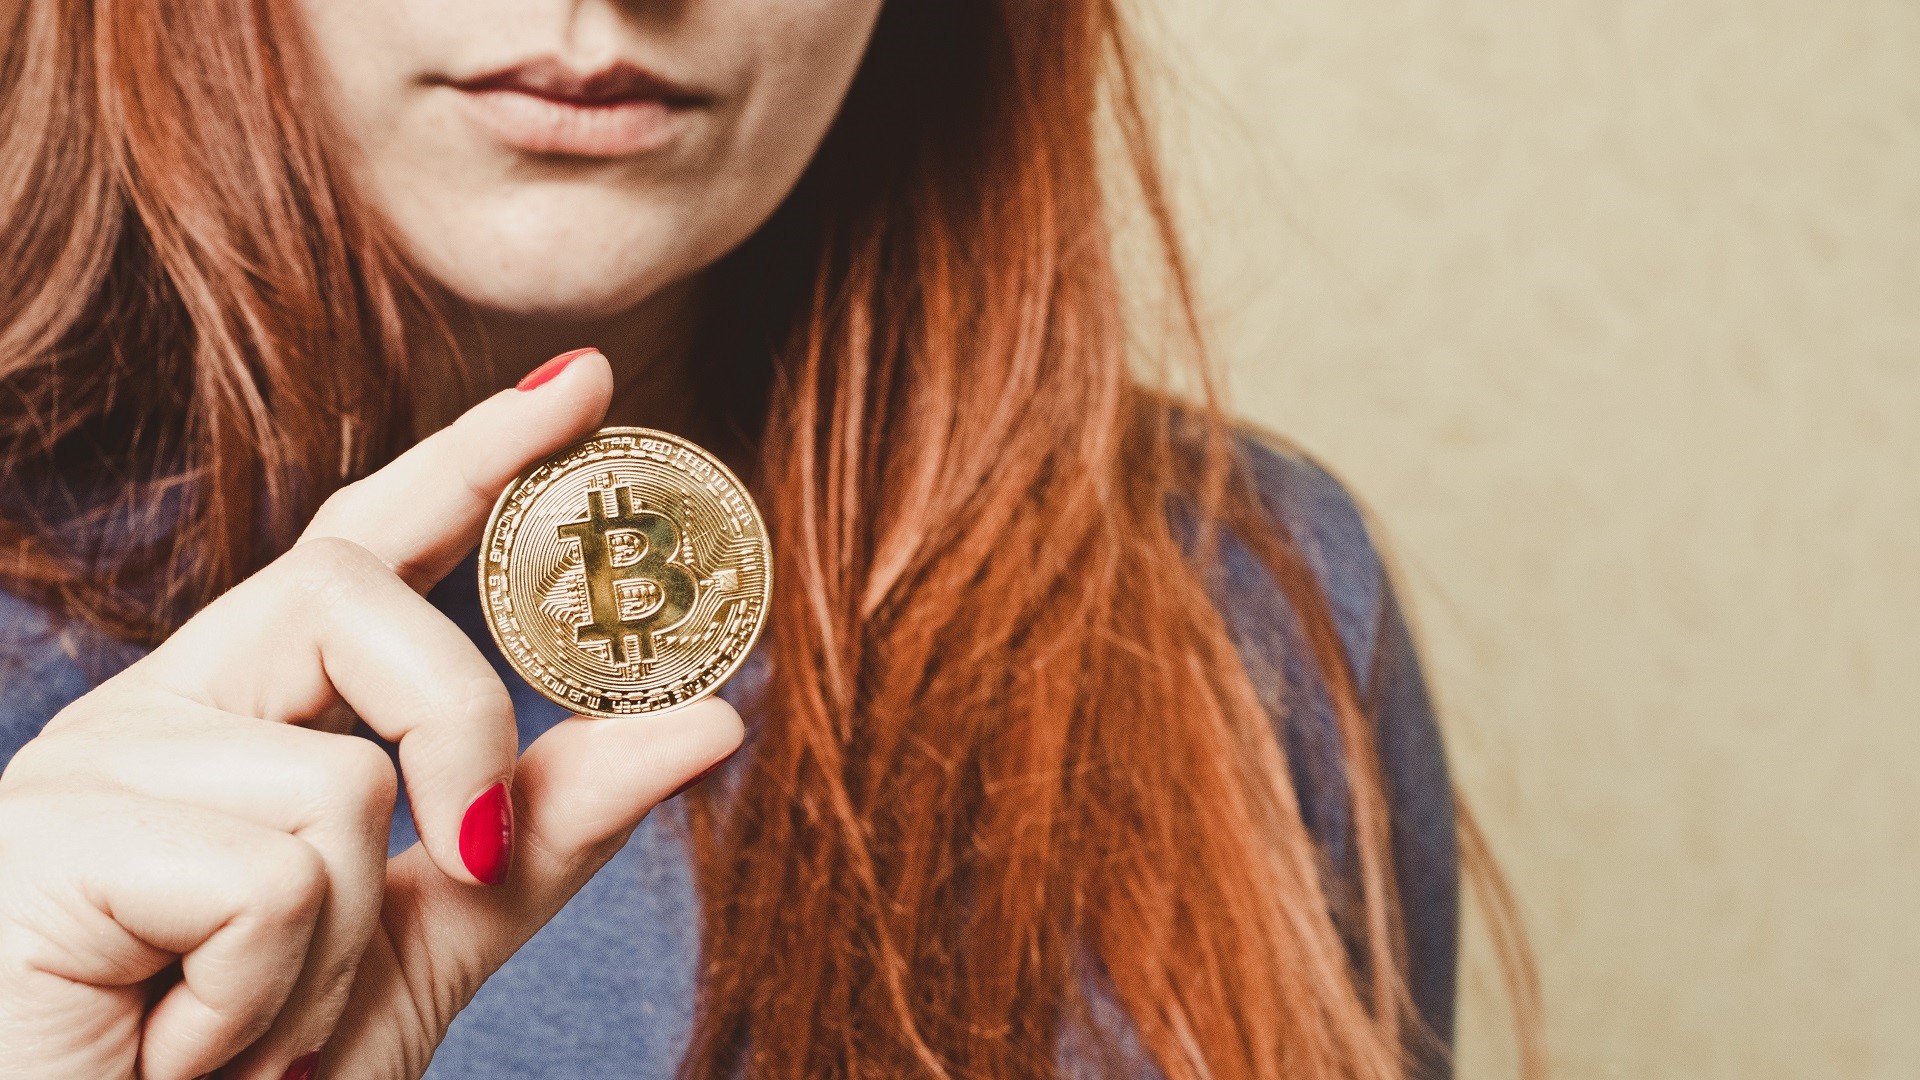 Penny crypto how to mine bitcoins for dummies